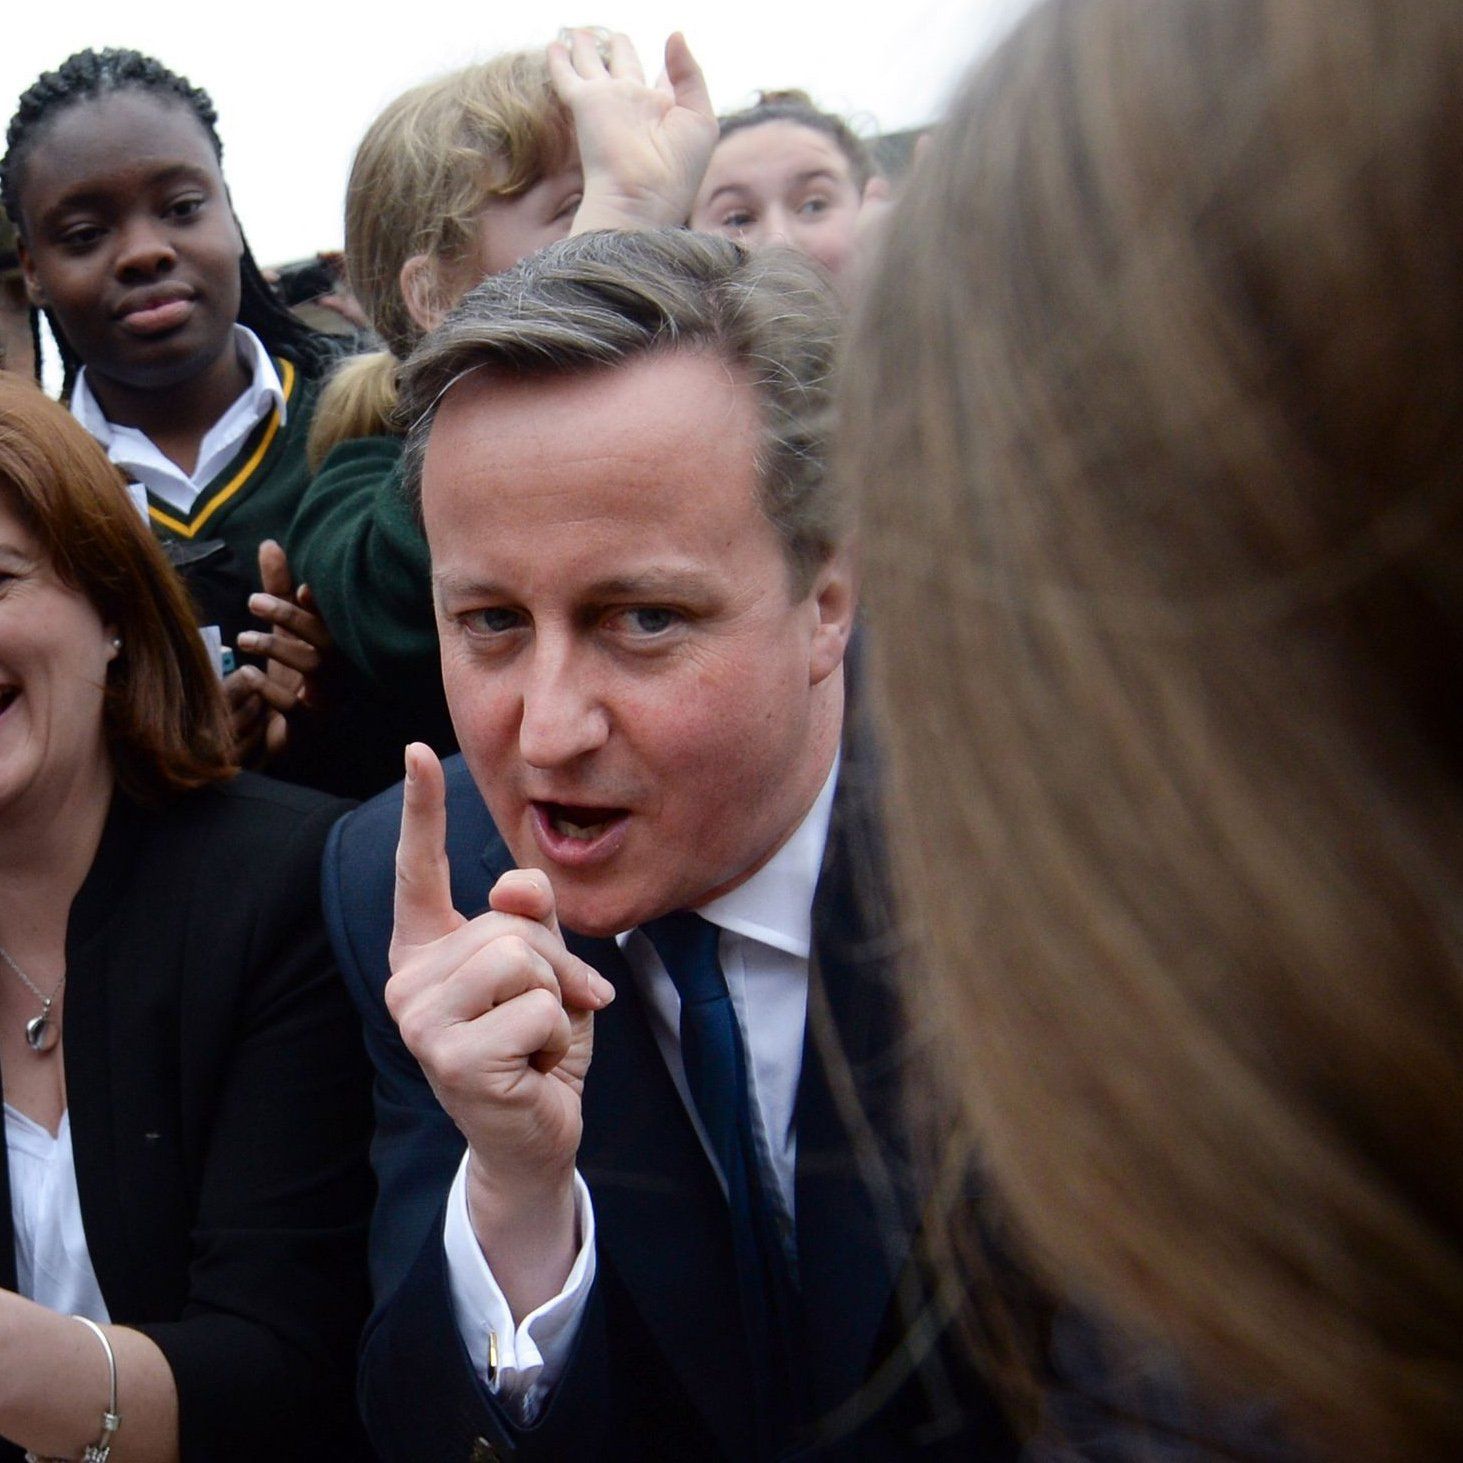 Prime Minister David Cameron Announces Free Schools Pledge